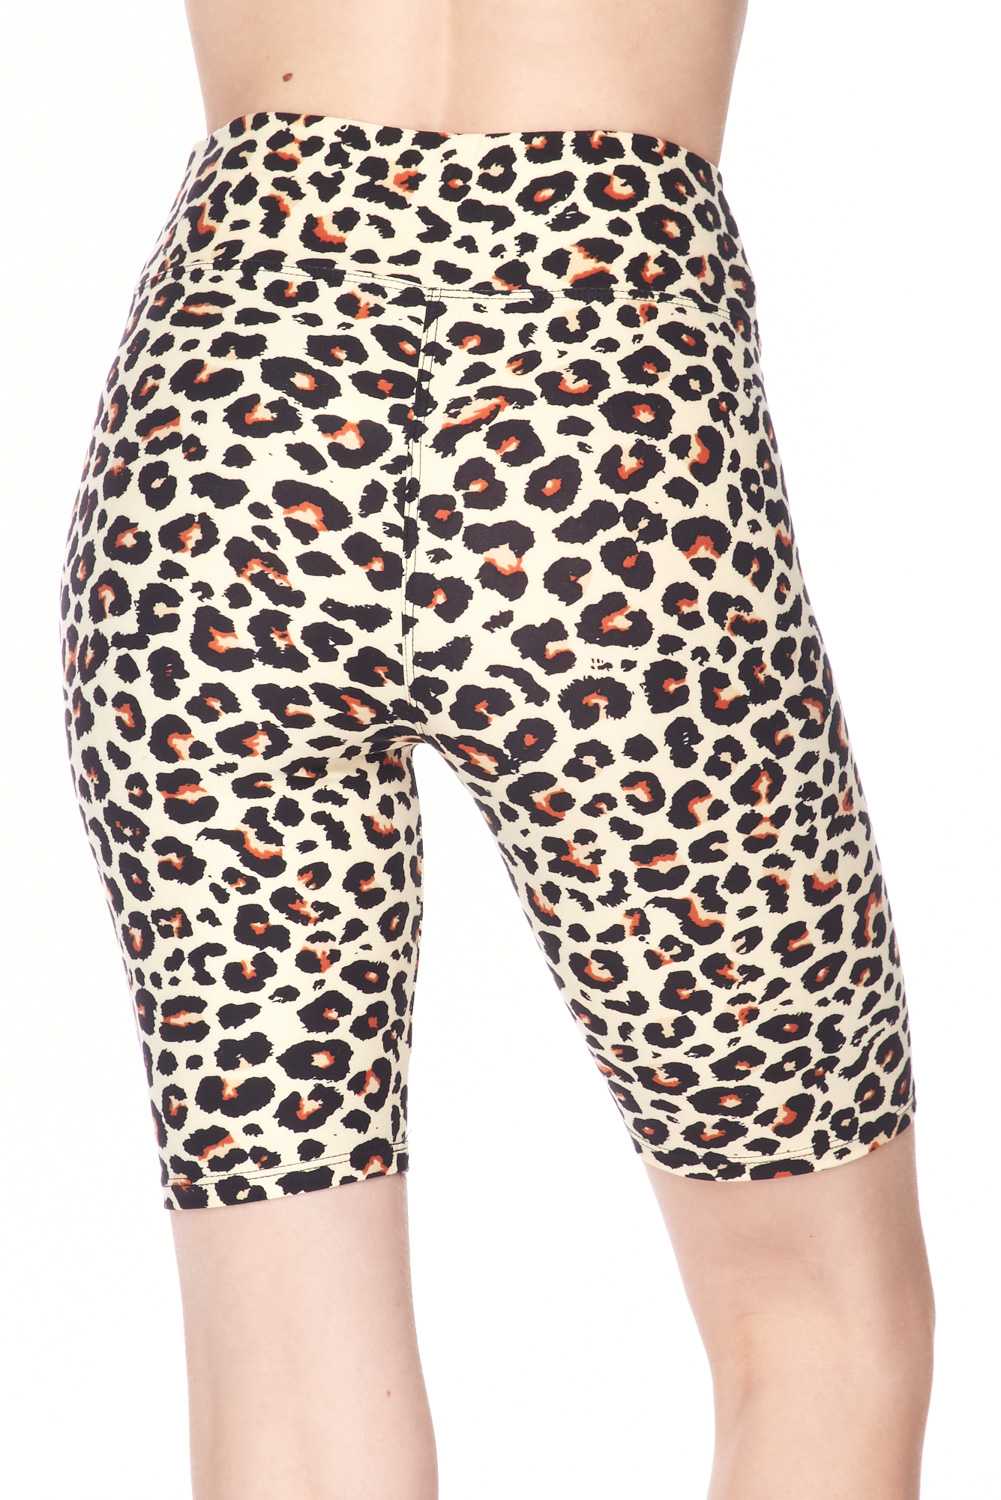 Women's Brushed High Waist Leopard Animal Print Biker Shorts - 1